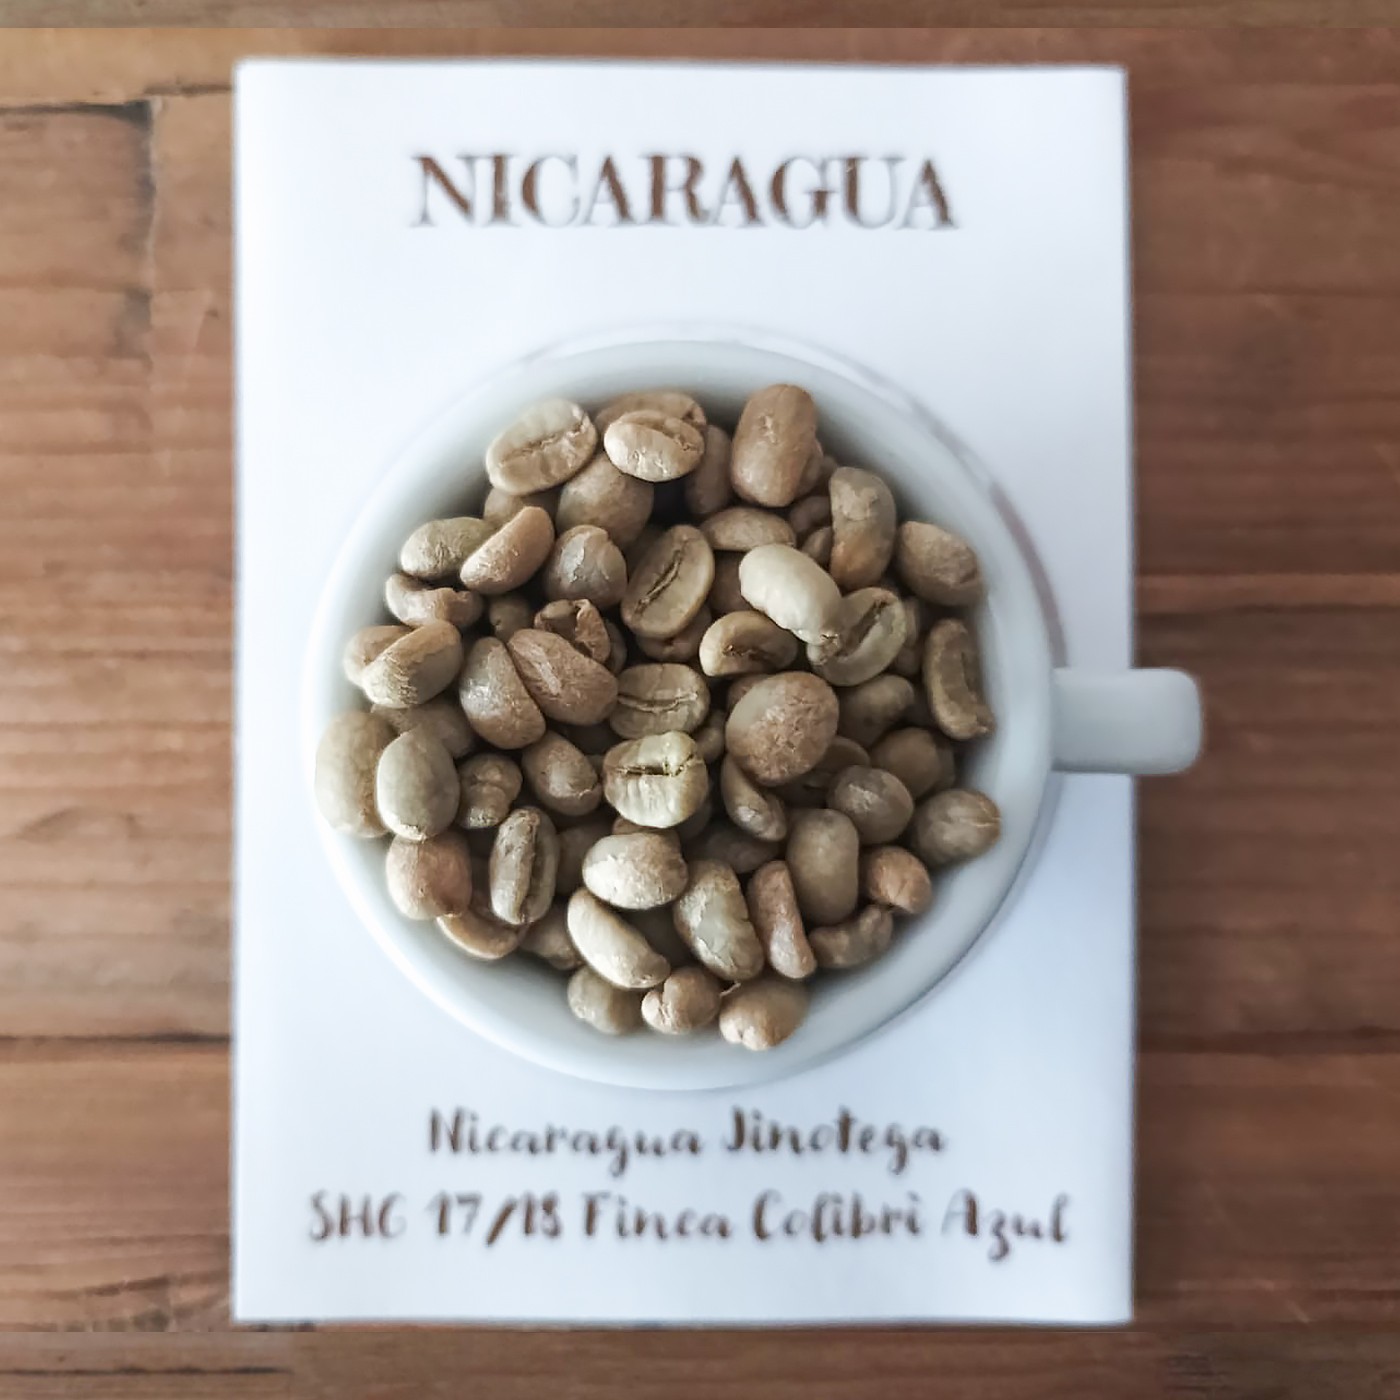 NICARAGUA COLIBRÌ AZUL Caffè Fusari